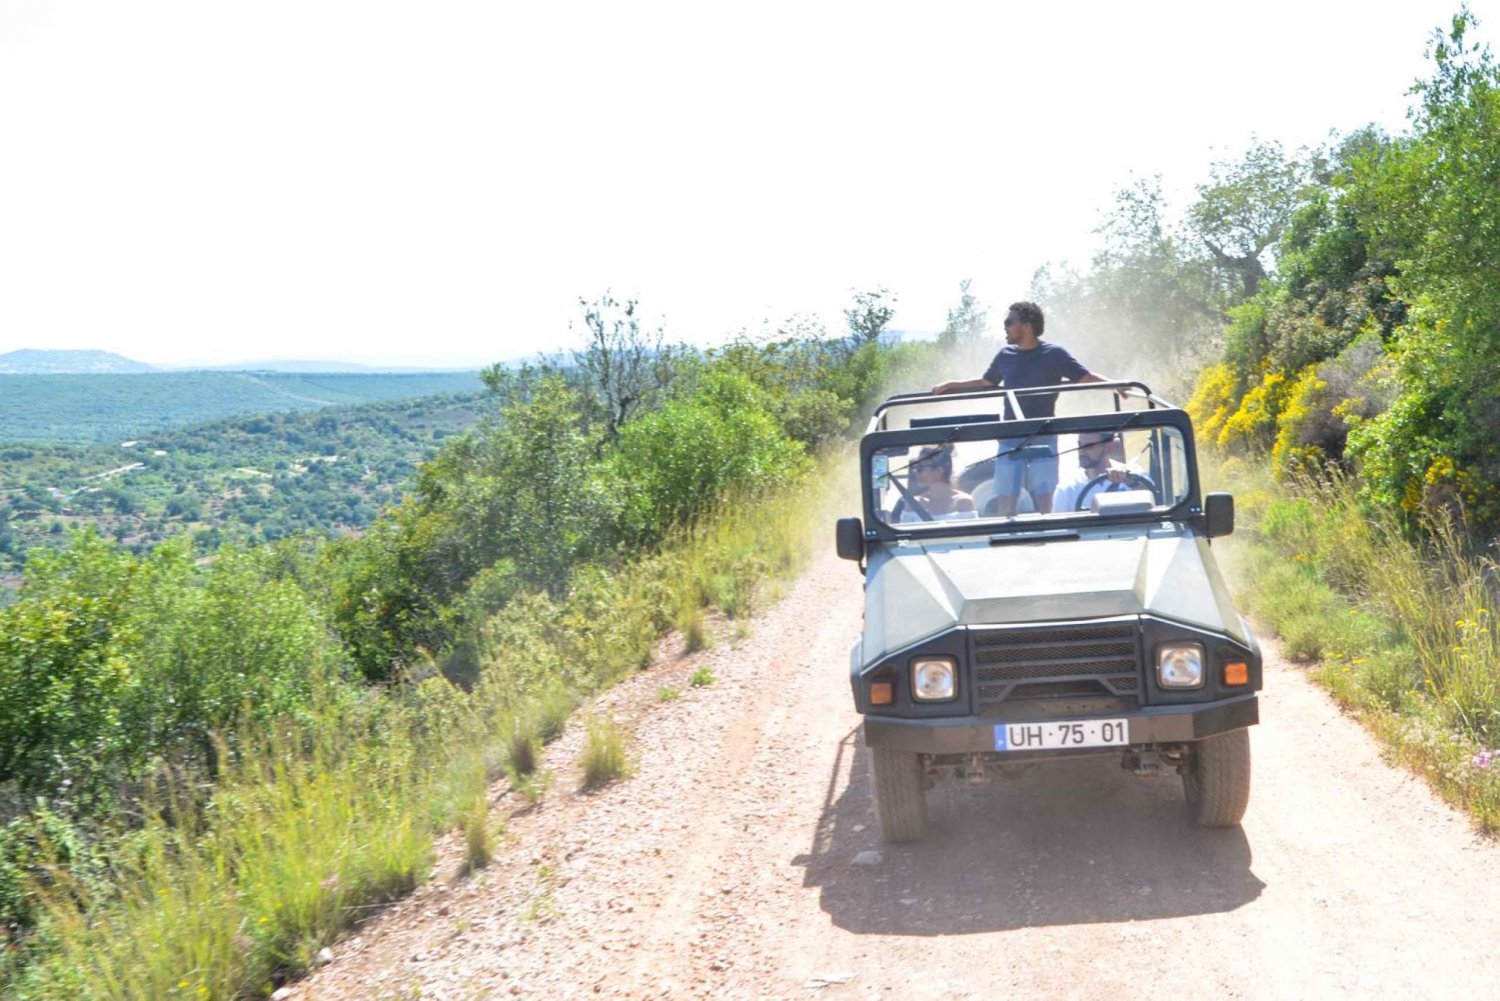 Momentos de Jeep Safari de Dia Inteiro no Algarve